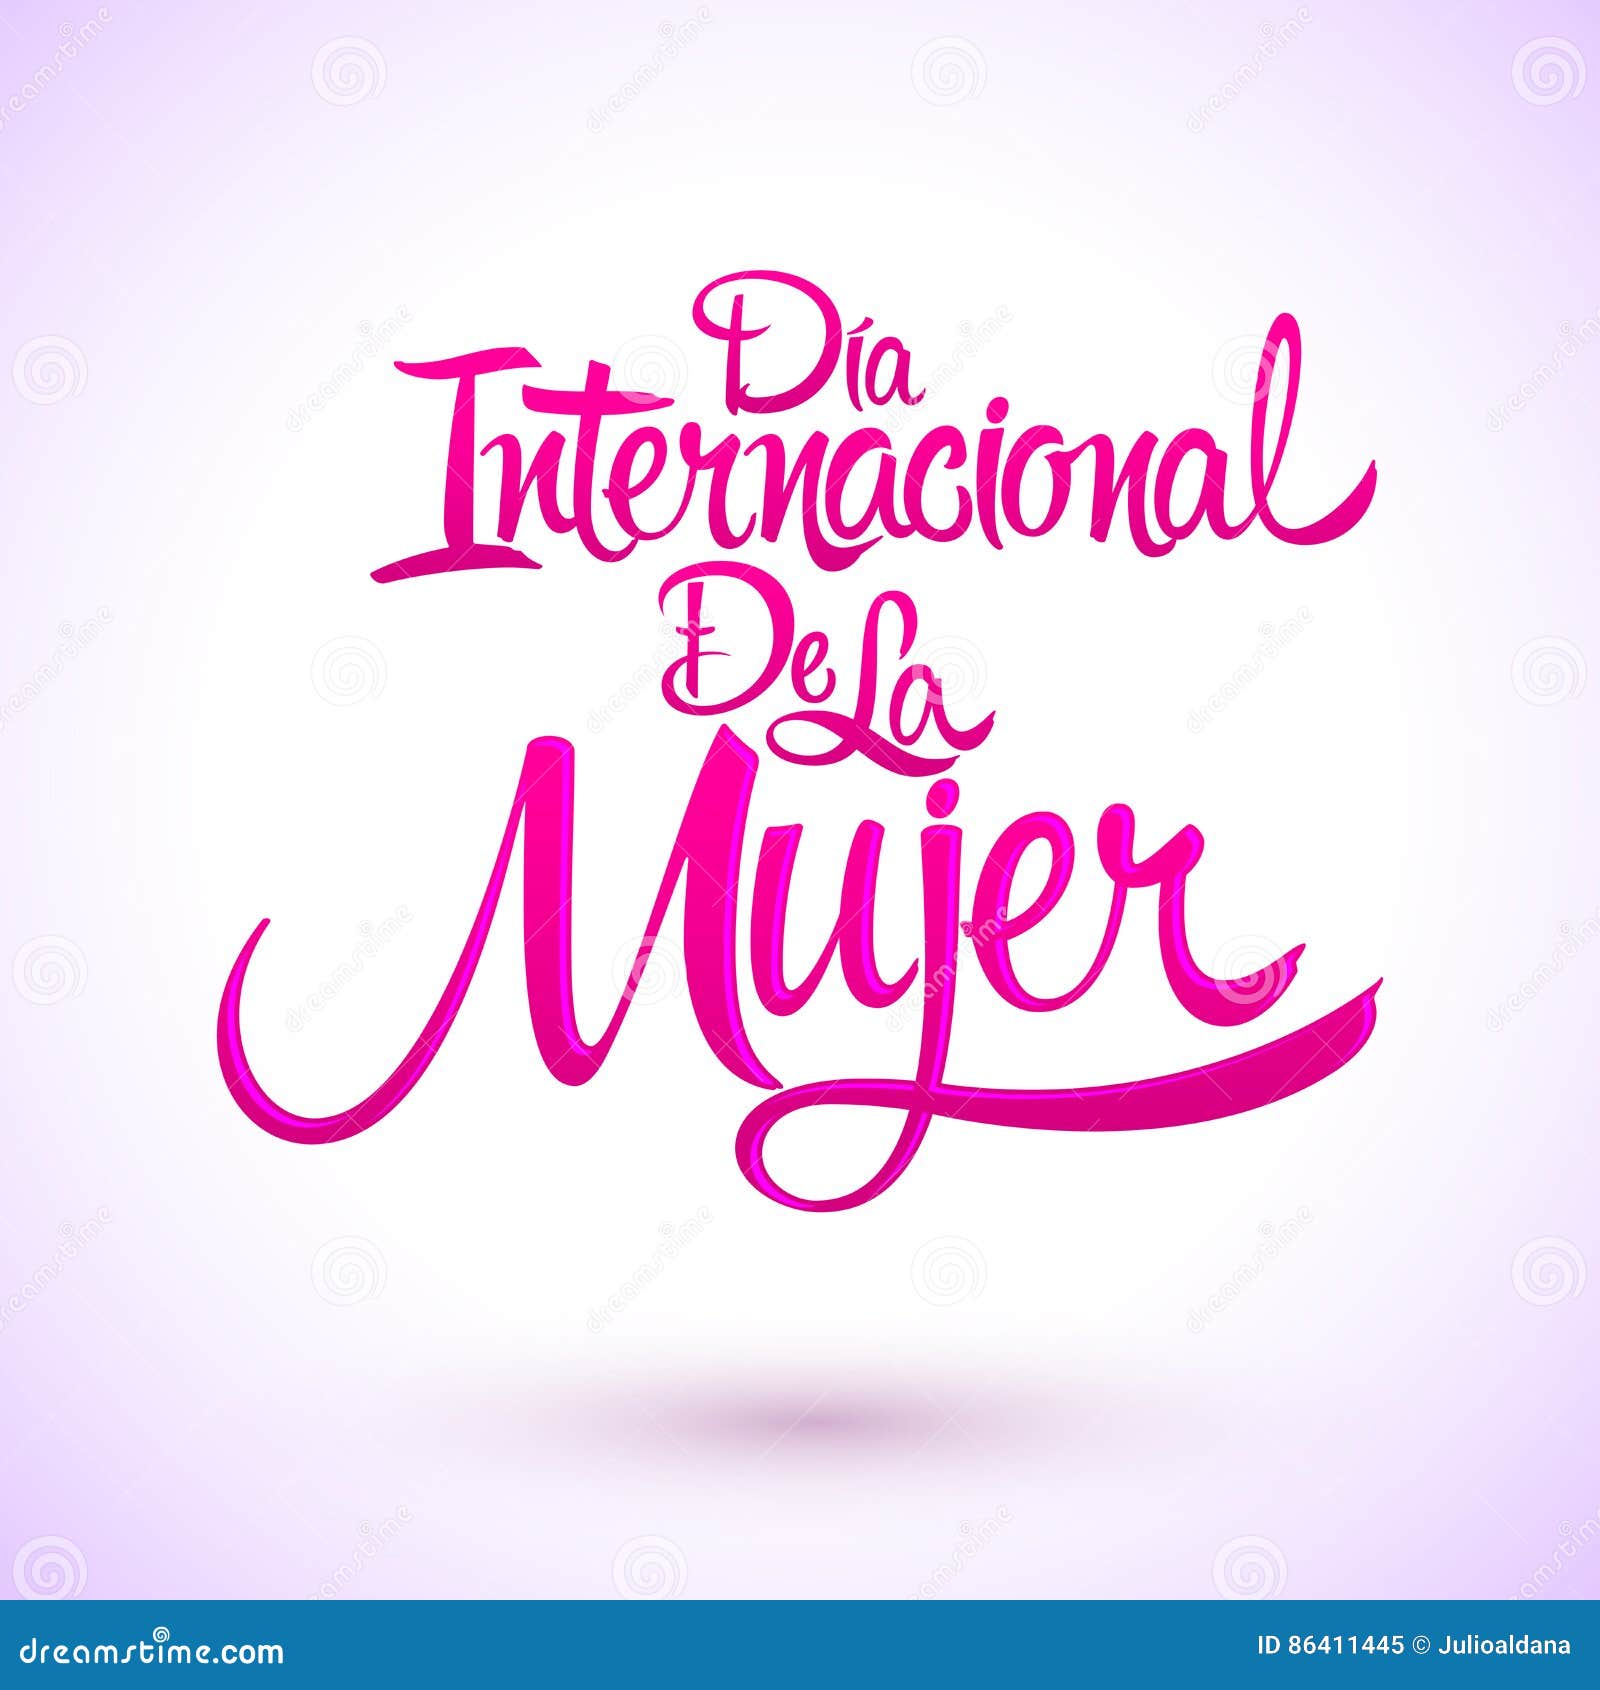 dia internacional de la mujer, spanish translation: international womens day